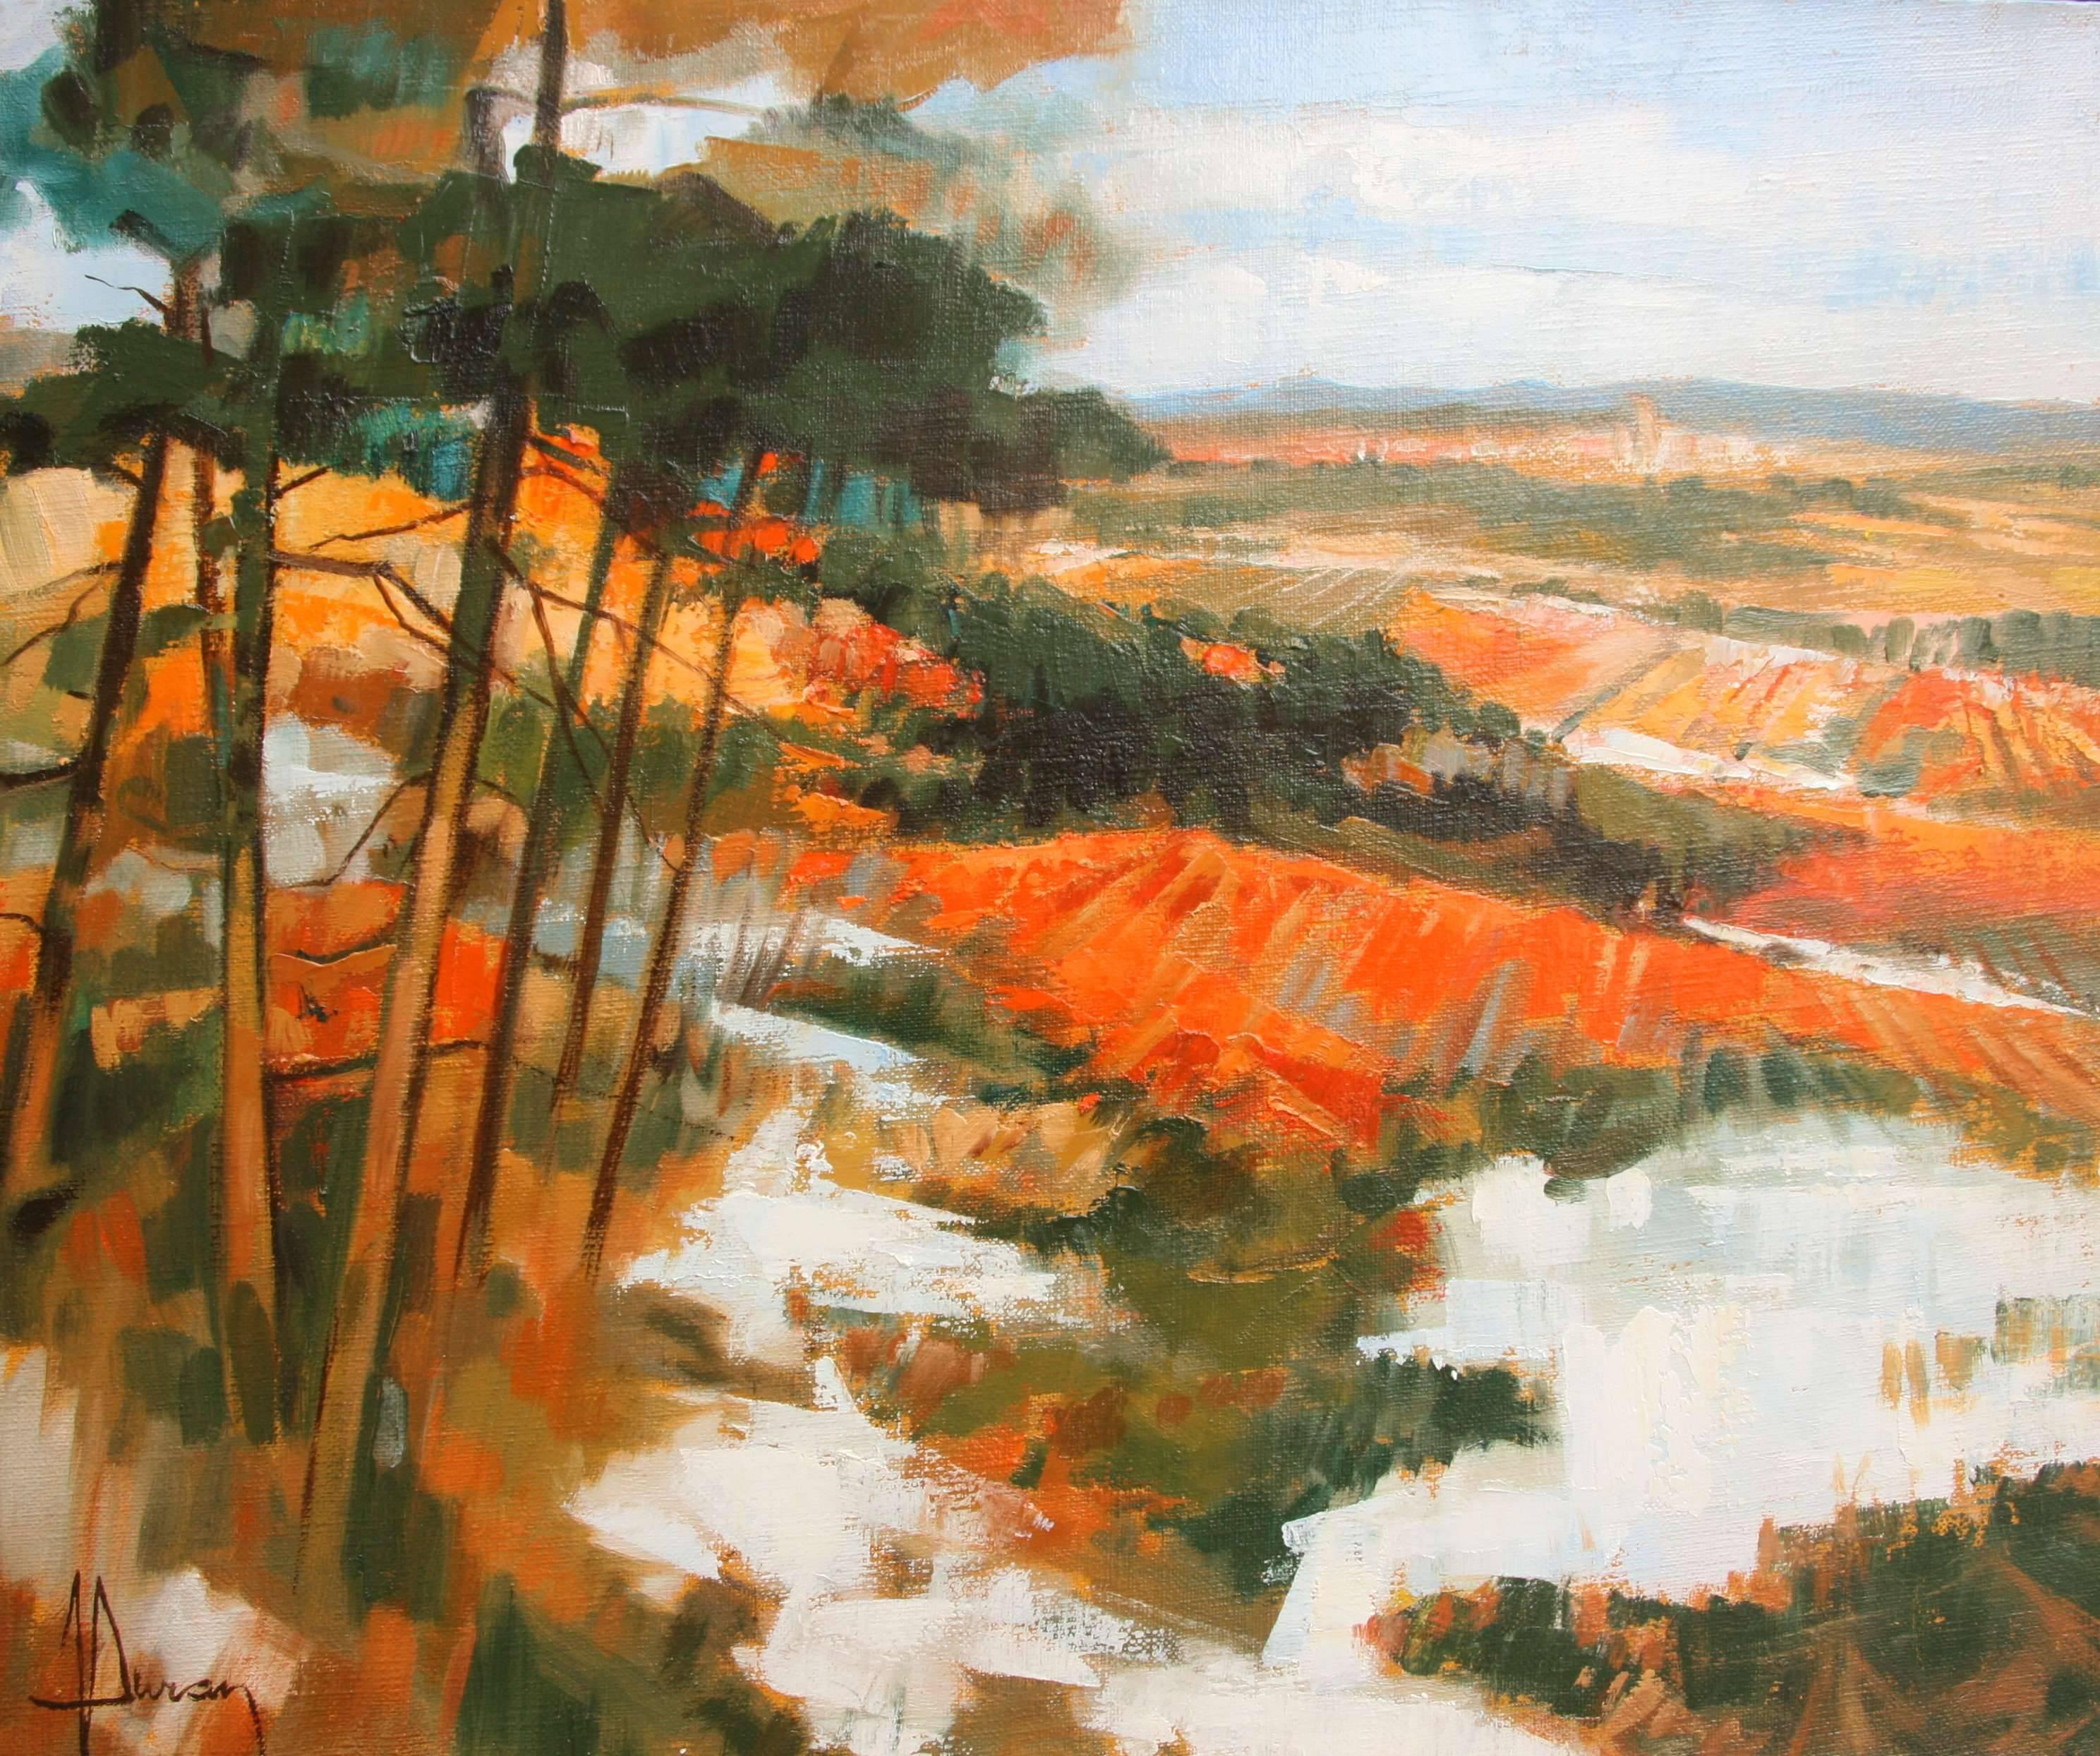 Jori Duran Landscape Painting – The stream